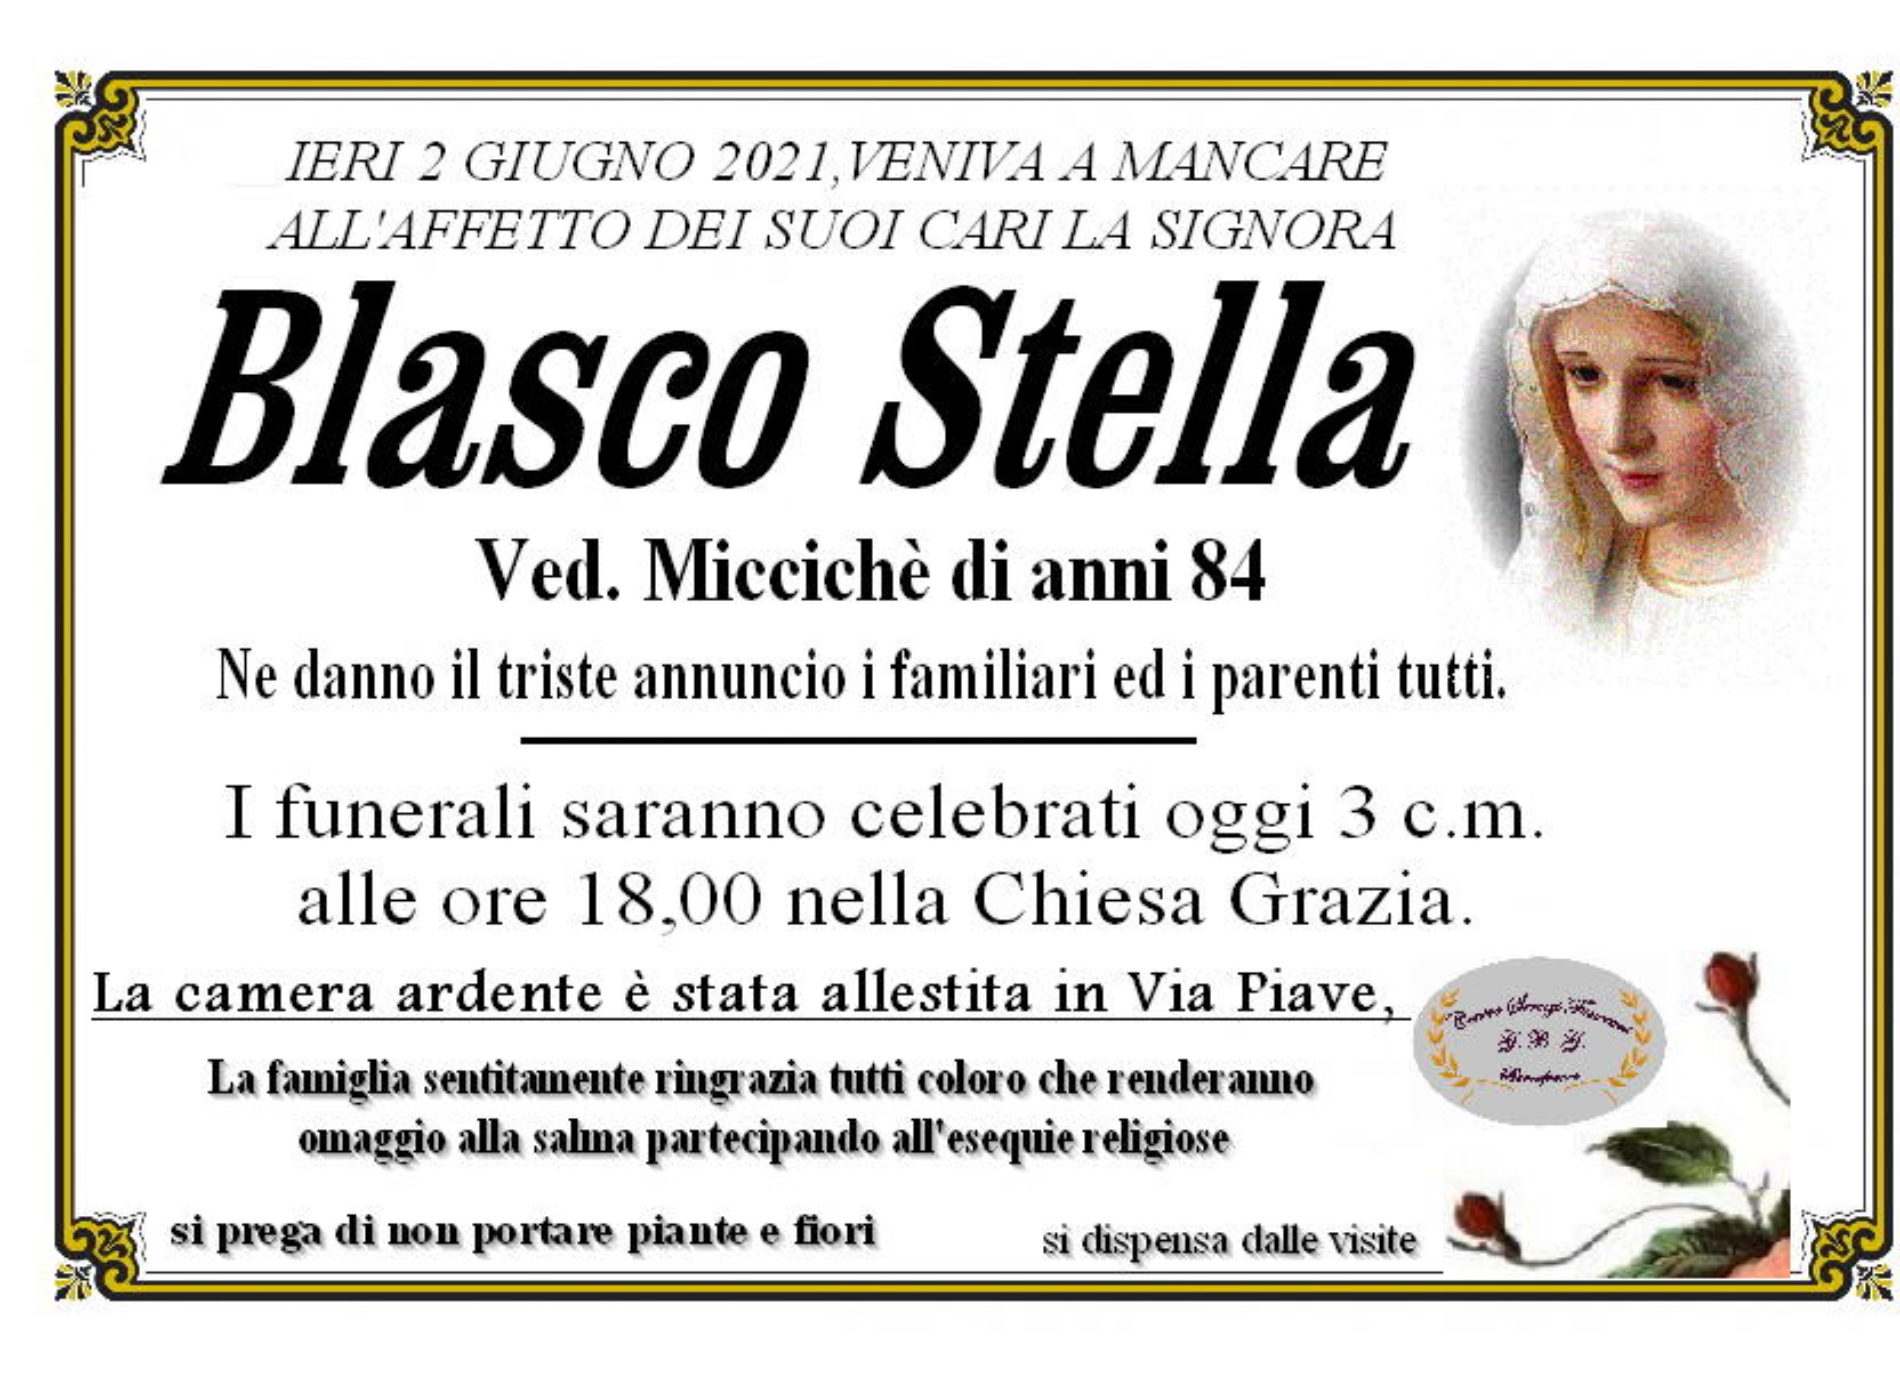 Annuncio servizi funerari agenzia G.B.G. sig.ra Blasco Stella ved. Miccihè di anni 84